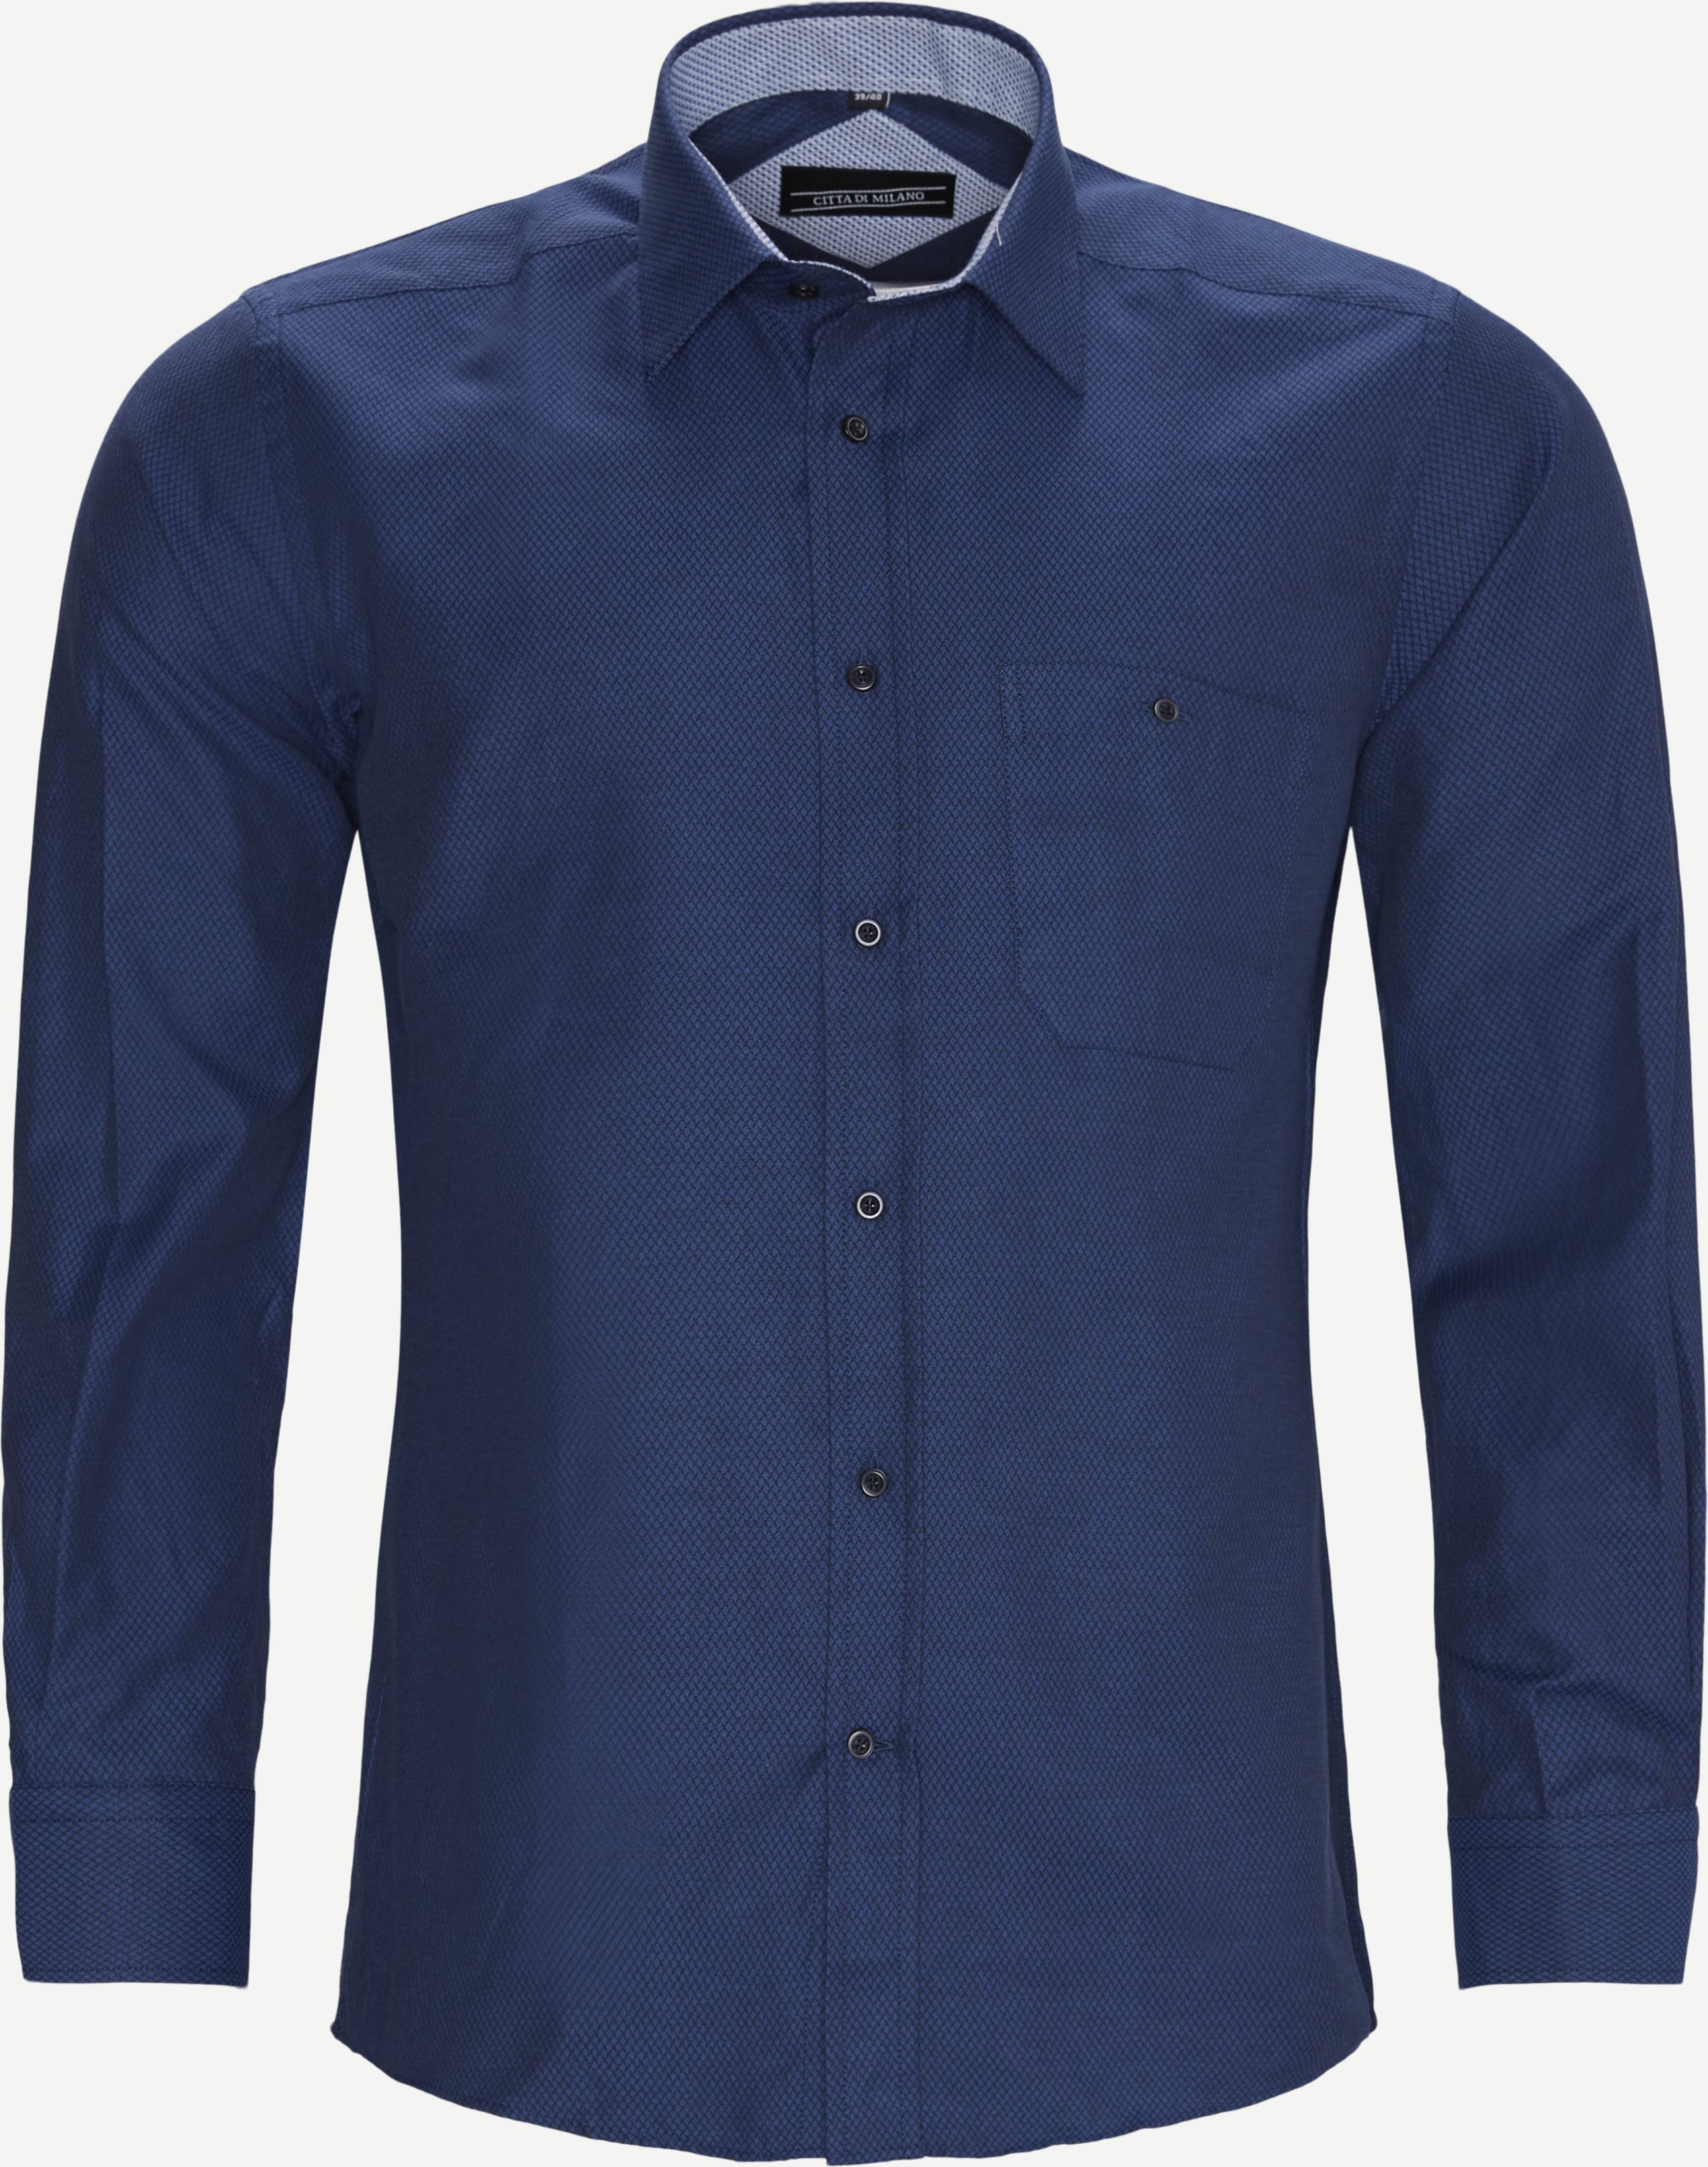 Leipzig Shirt - Shirts - Regular fit - Blue